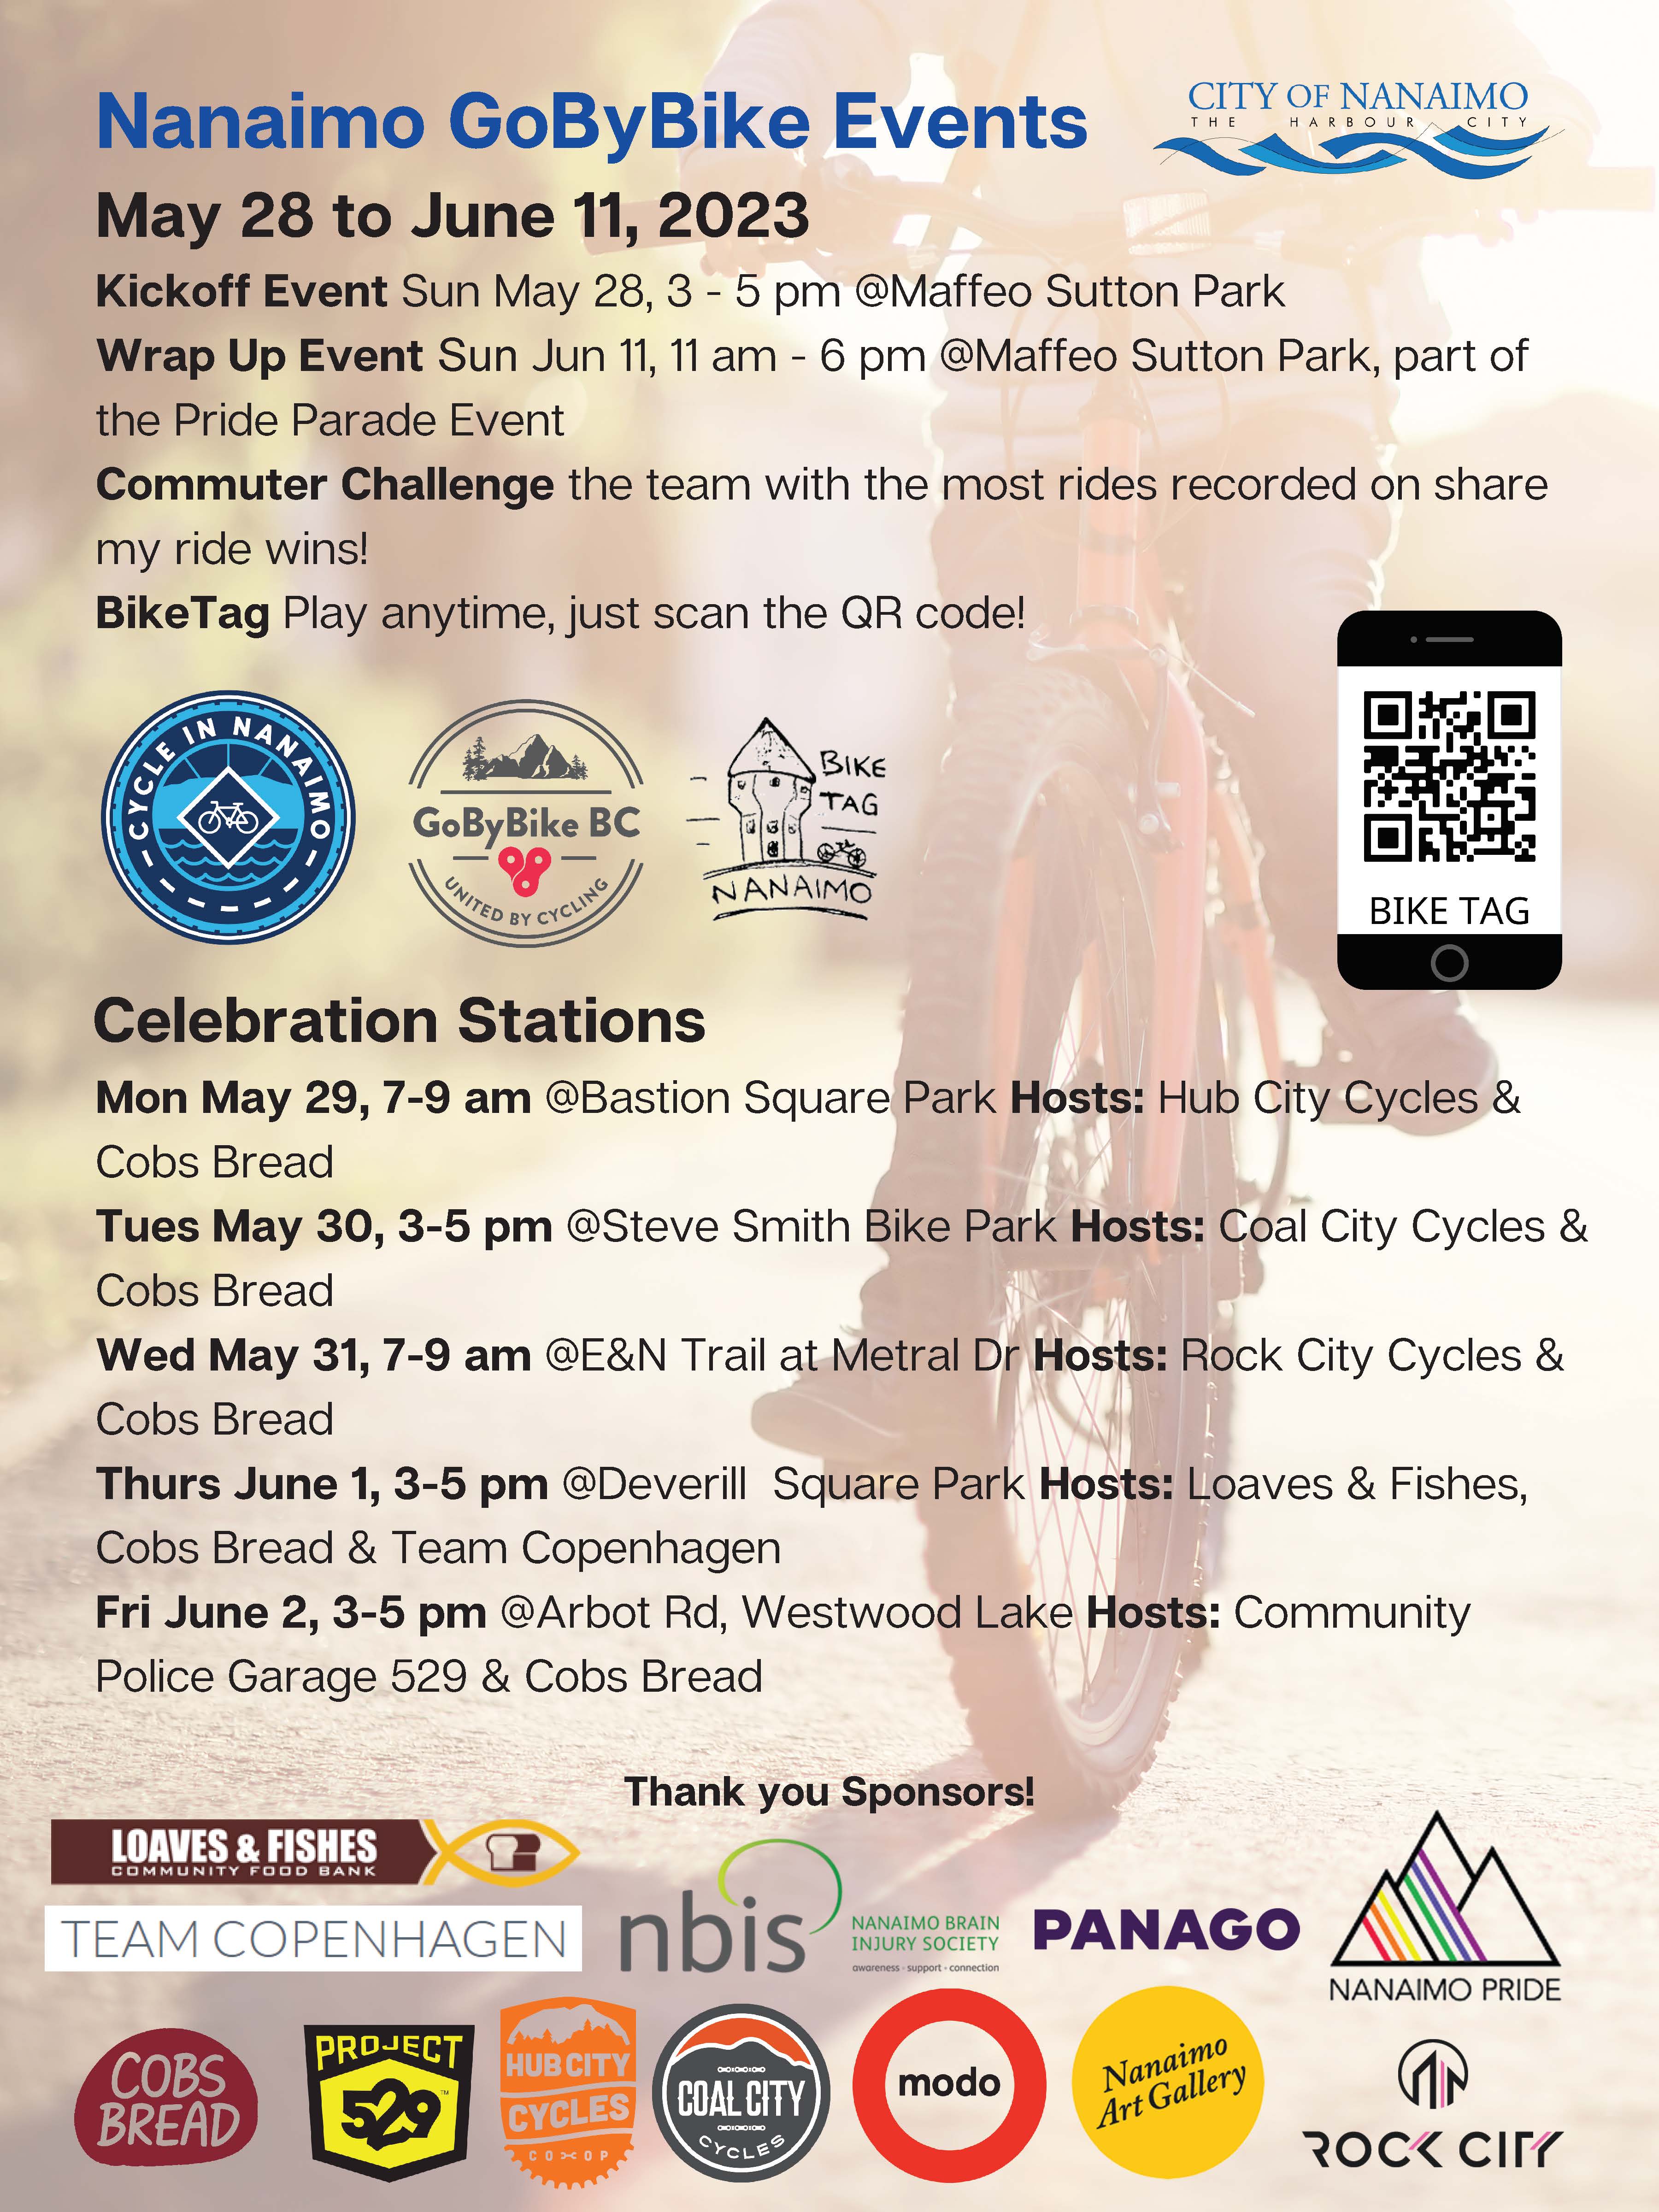 Gobybike Nanaimo Events Poster